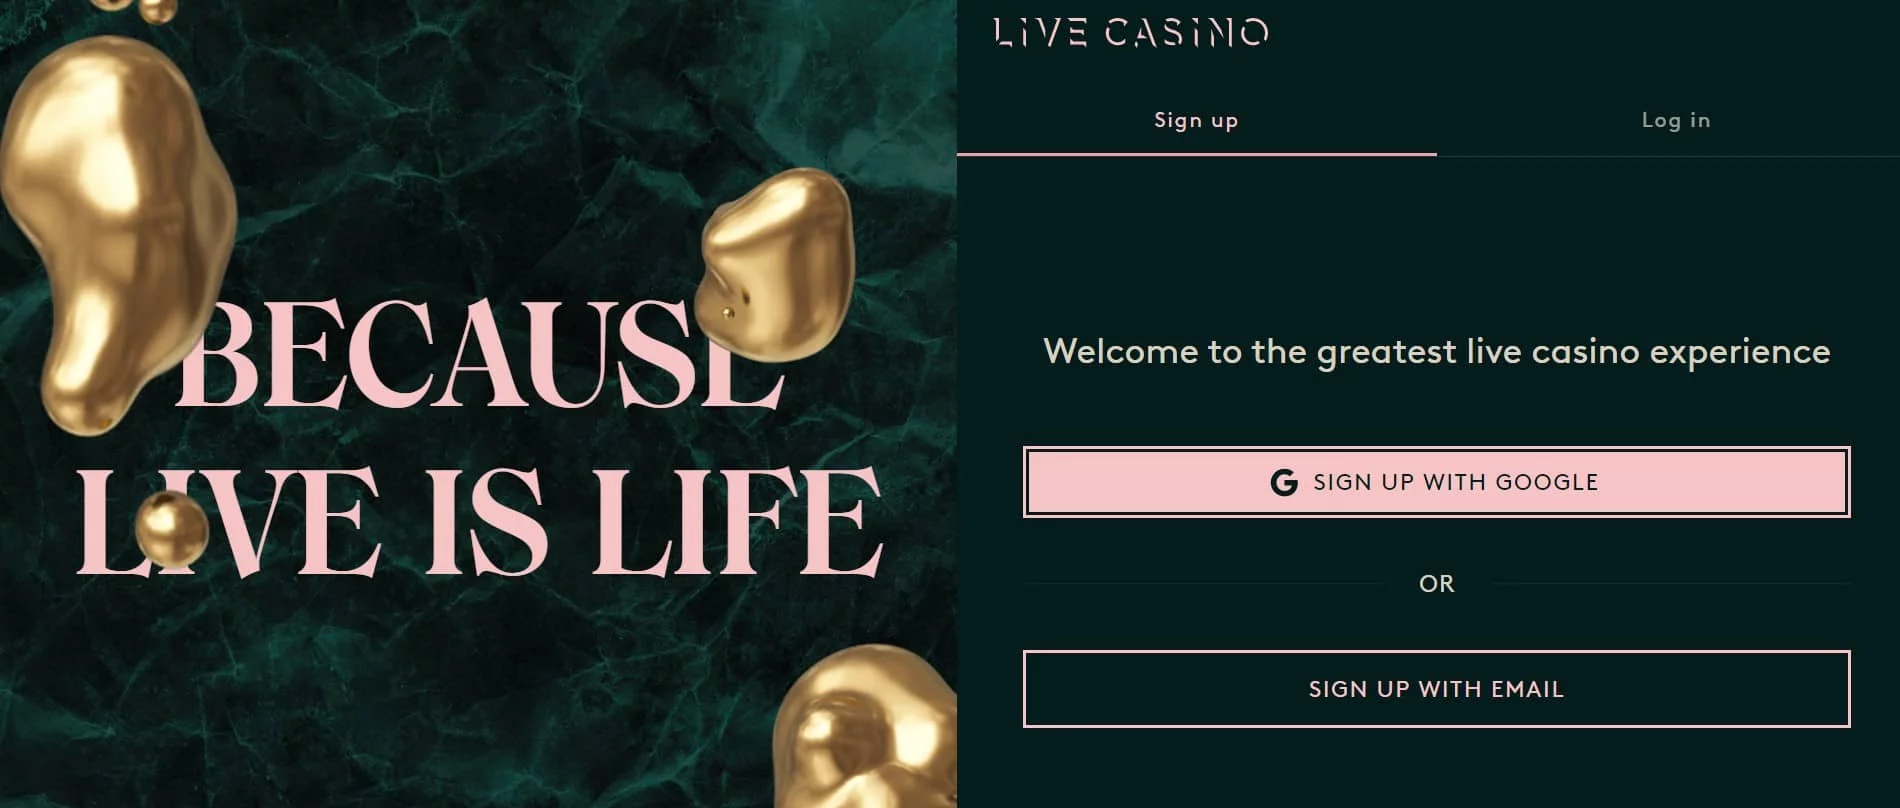 Live Casino sign up-min